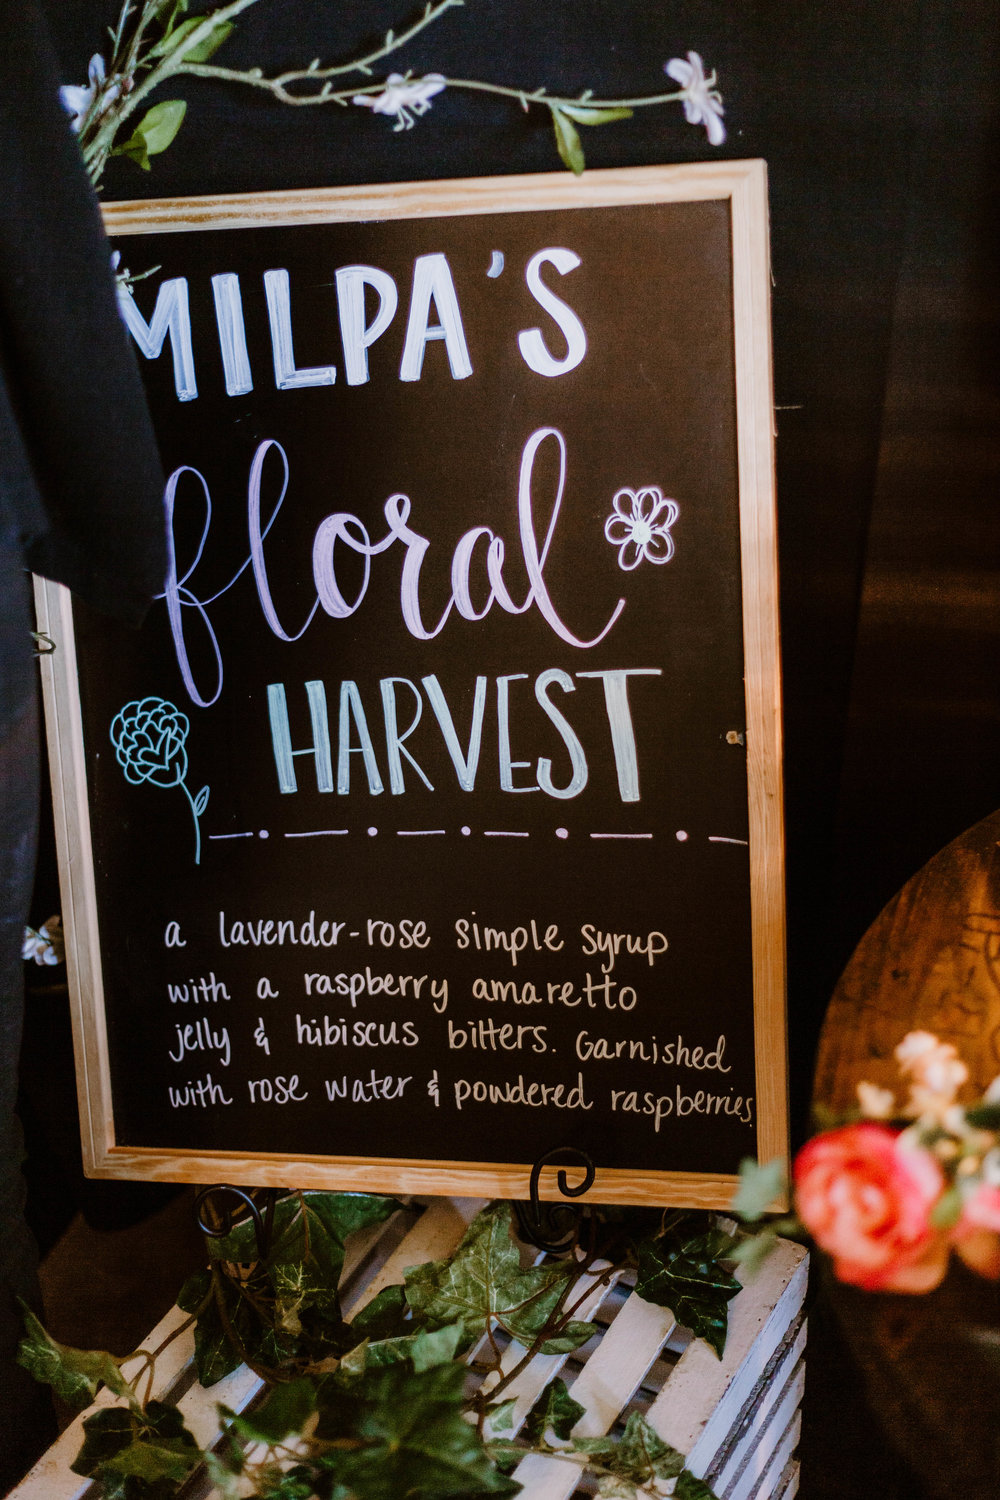  Milpa’s Floral Harvest margarita. 